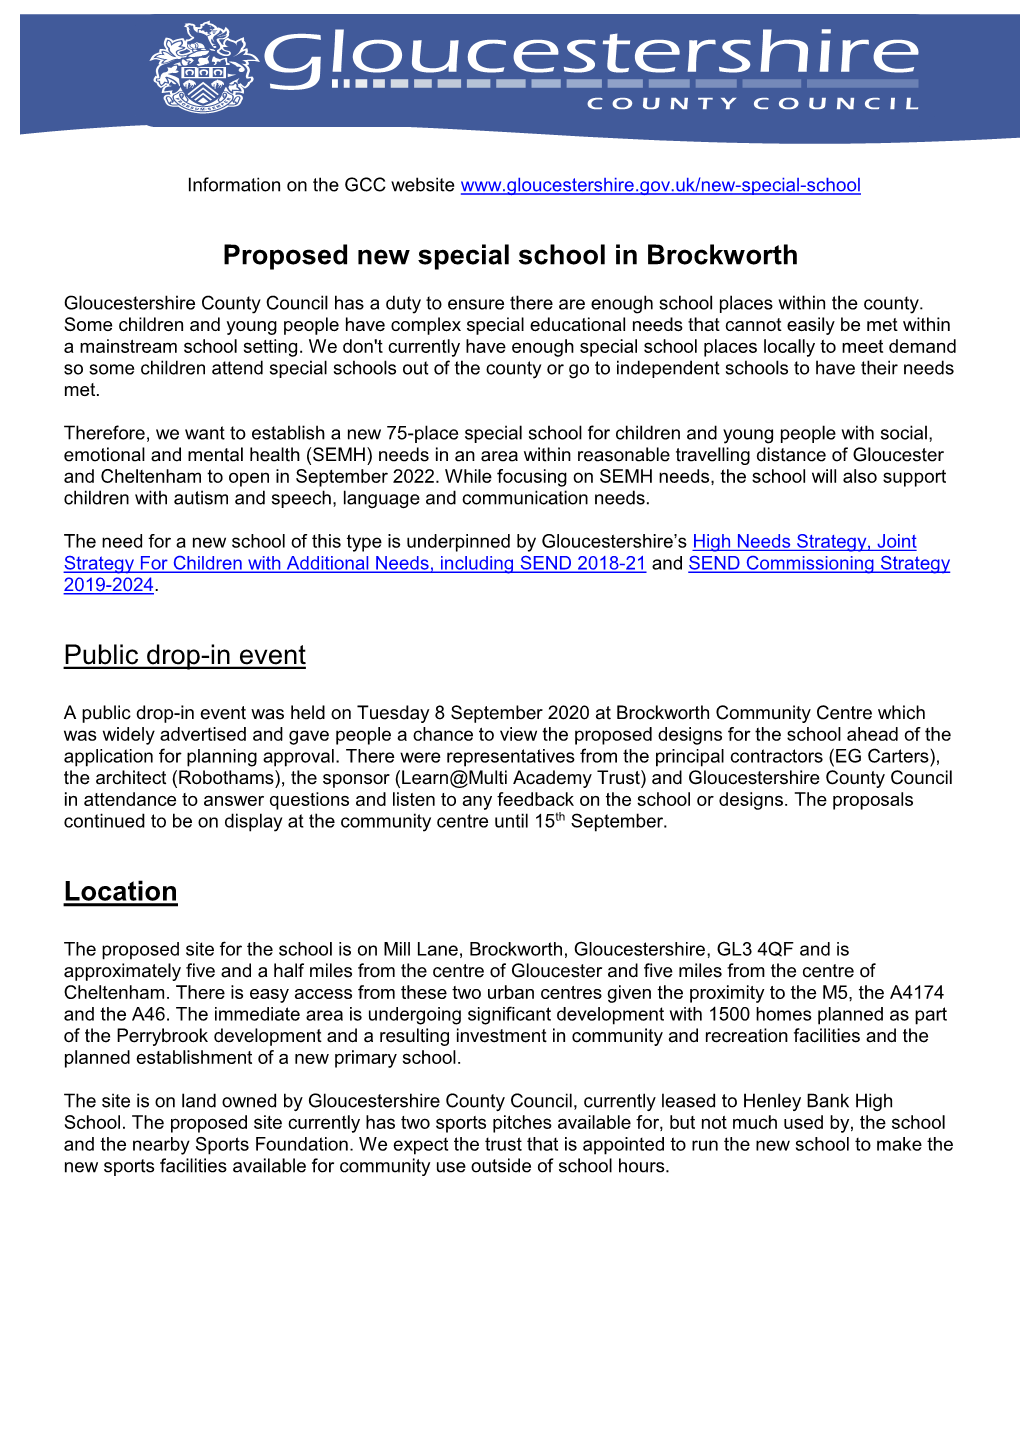 Proposed New Special School in Brockworth Public Drop-In Event Location